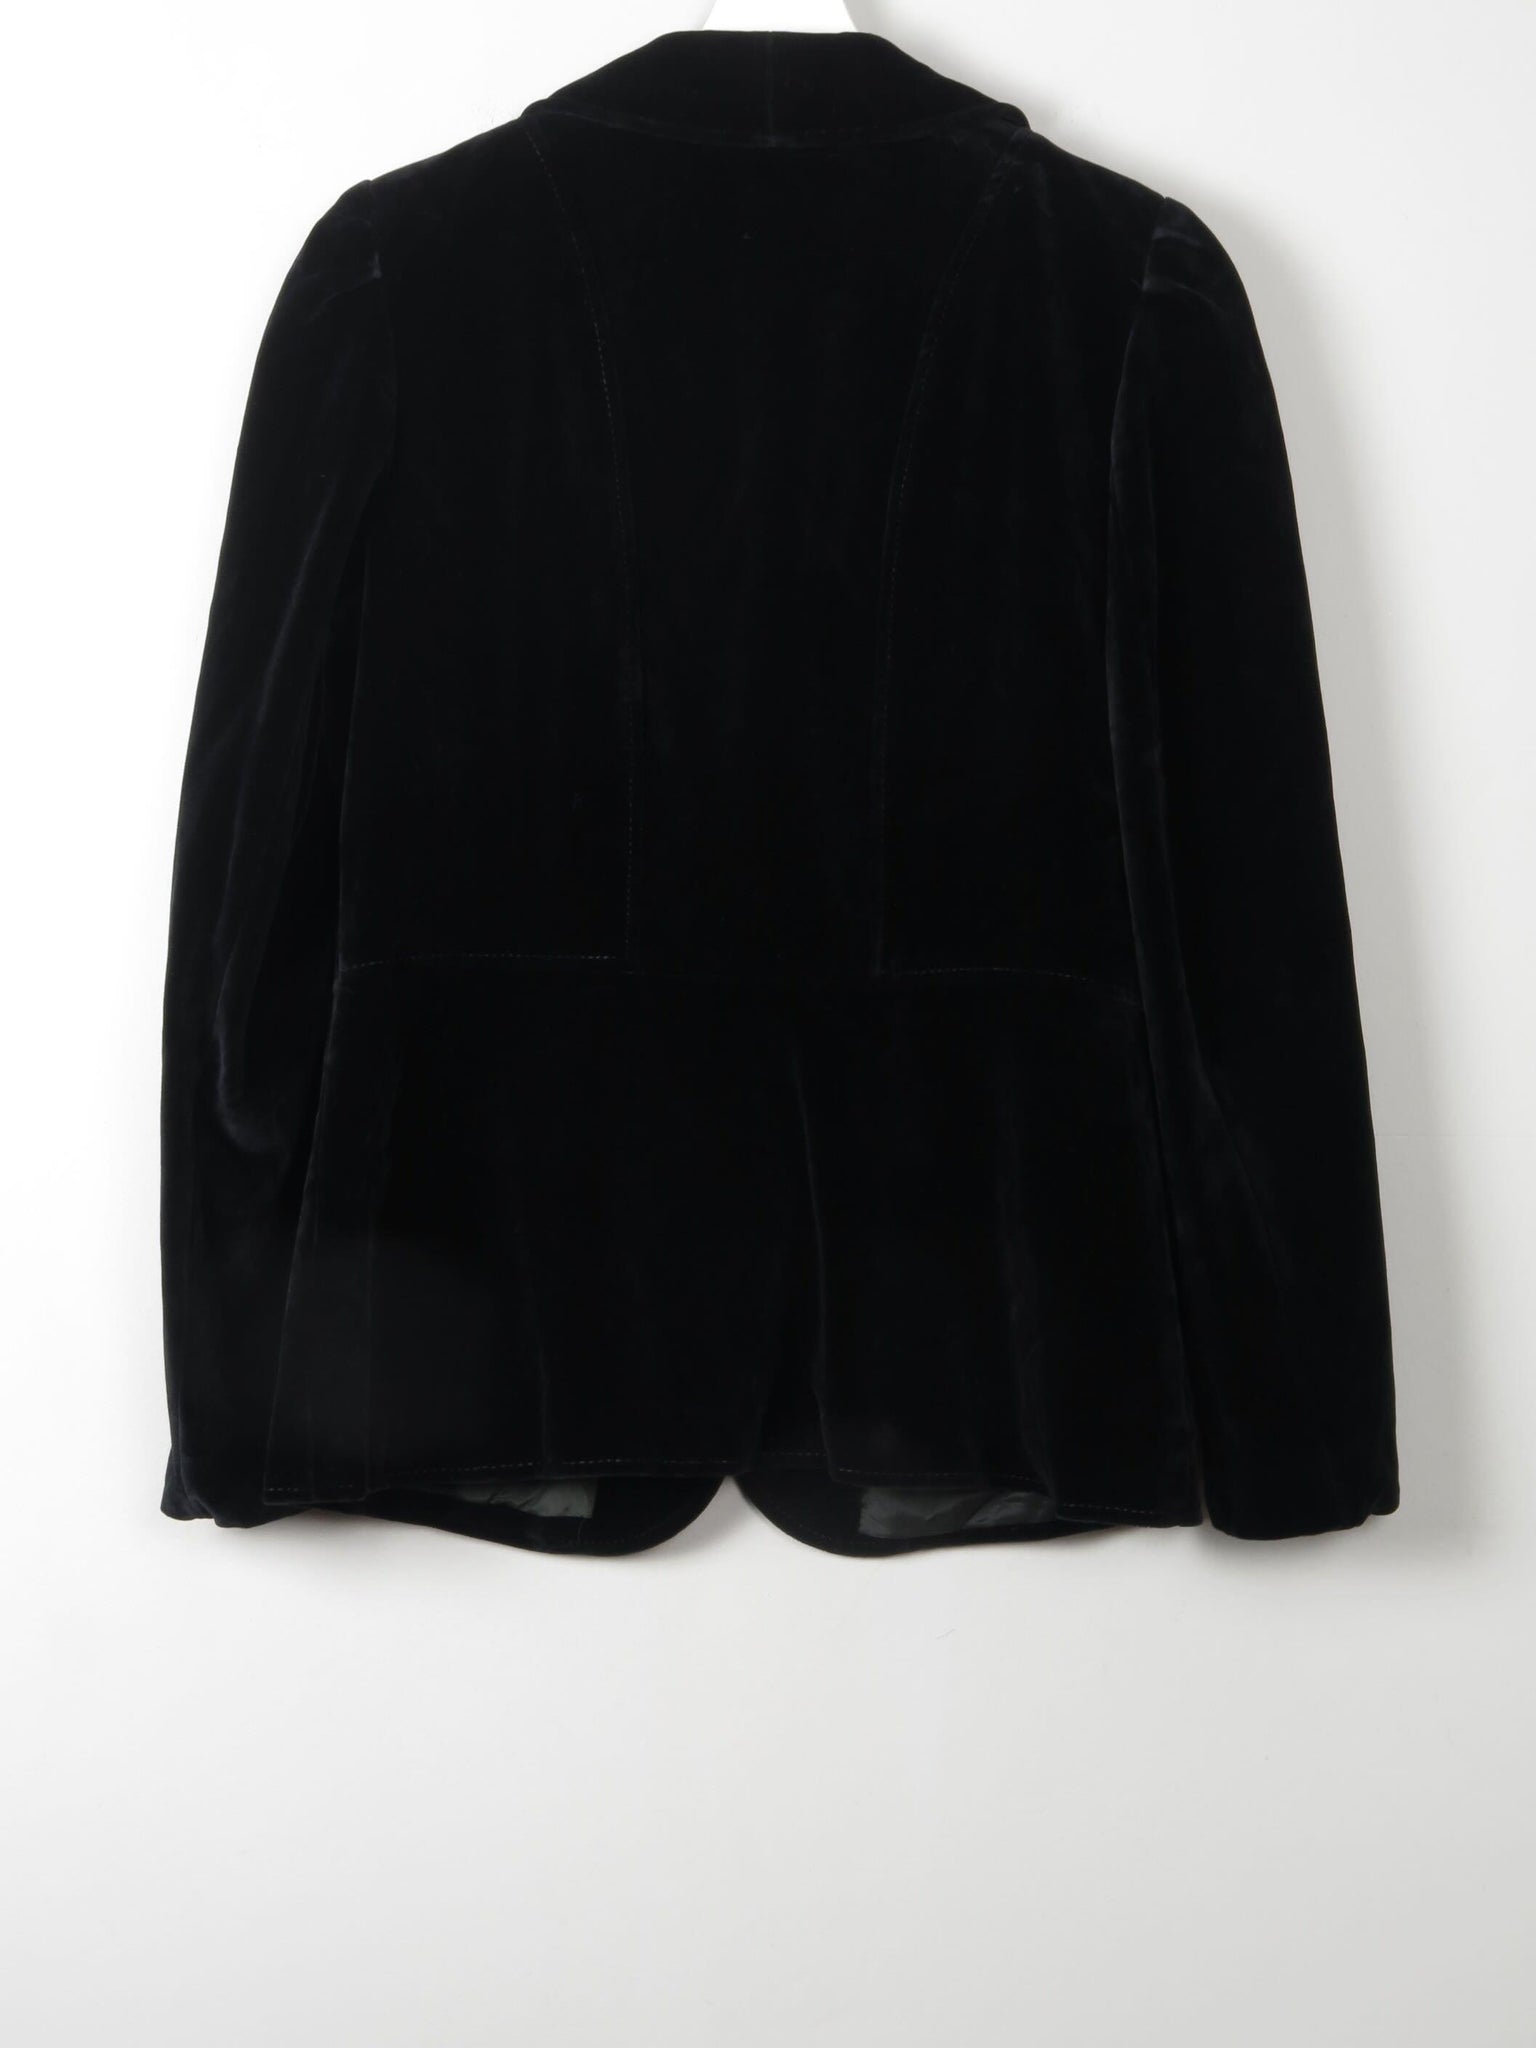 Women's 1970s Vintage Black Velvet Jacket Jacket XS/S - The Harlequin